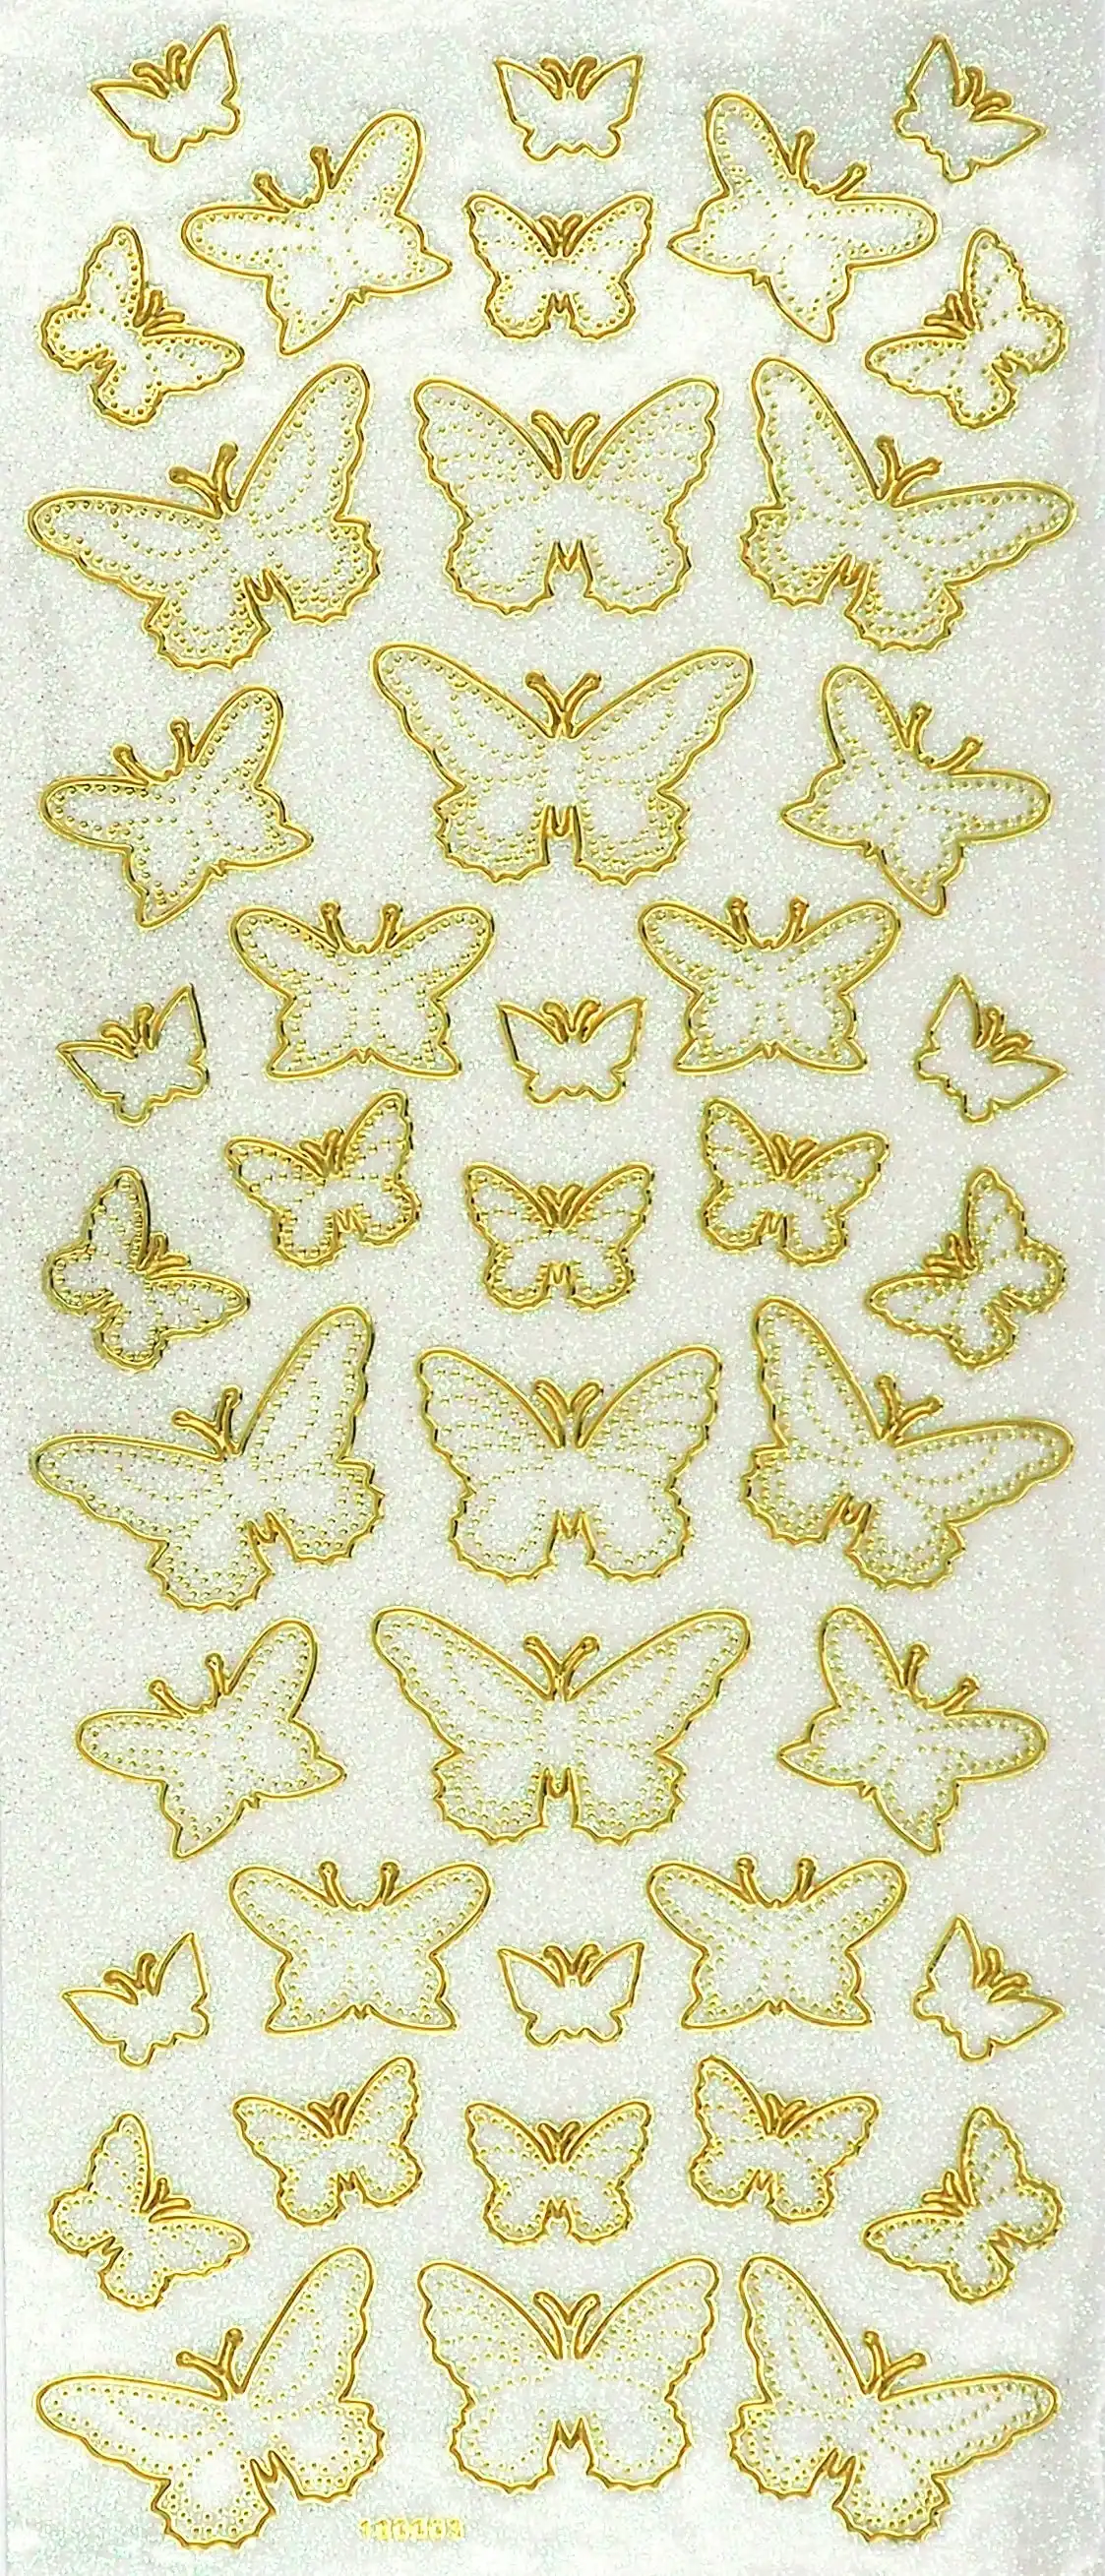 Arbee Foil Stickers Butterflies, Glitter Gold